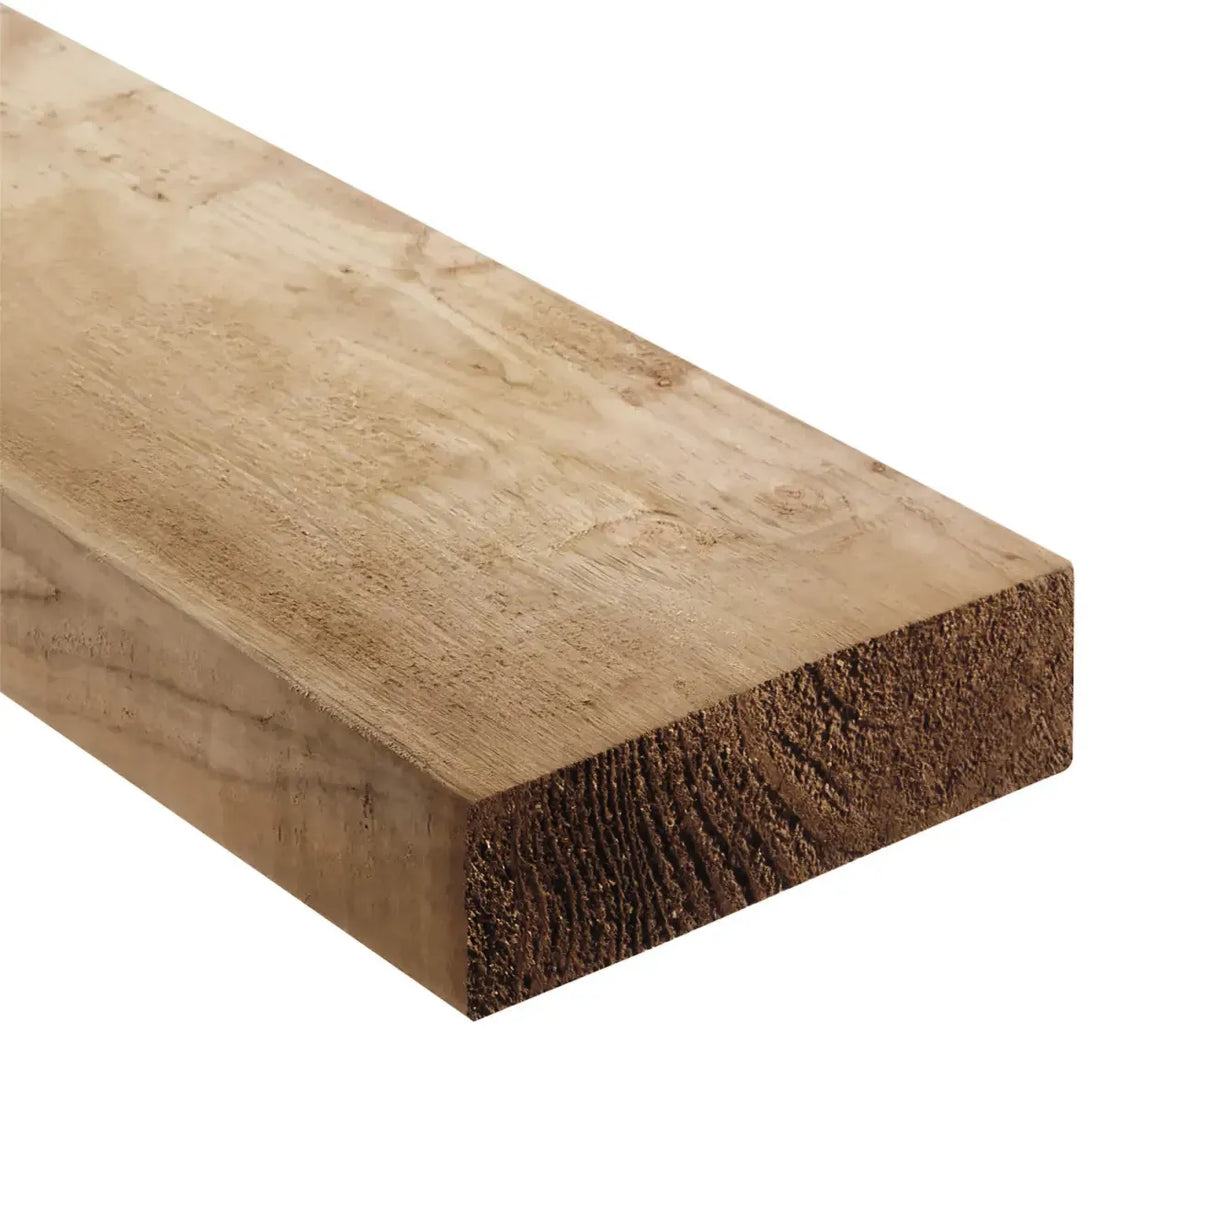 6x2-c24-timber-joist-2.4m